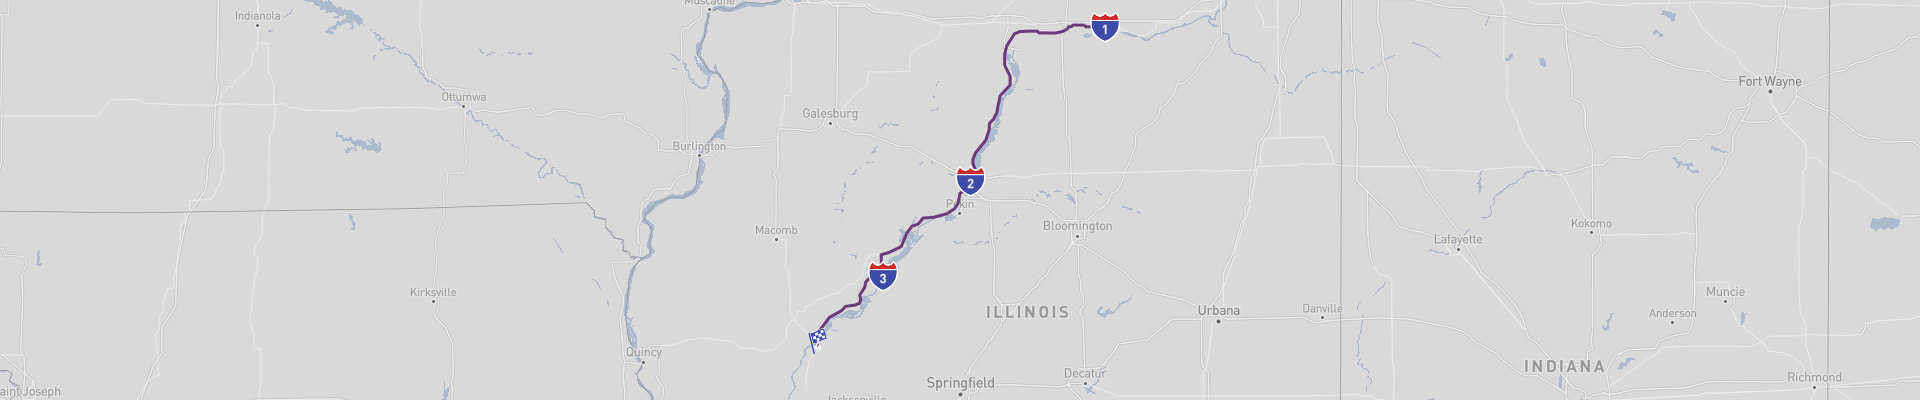 Illinois Rivier Road Trip